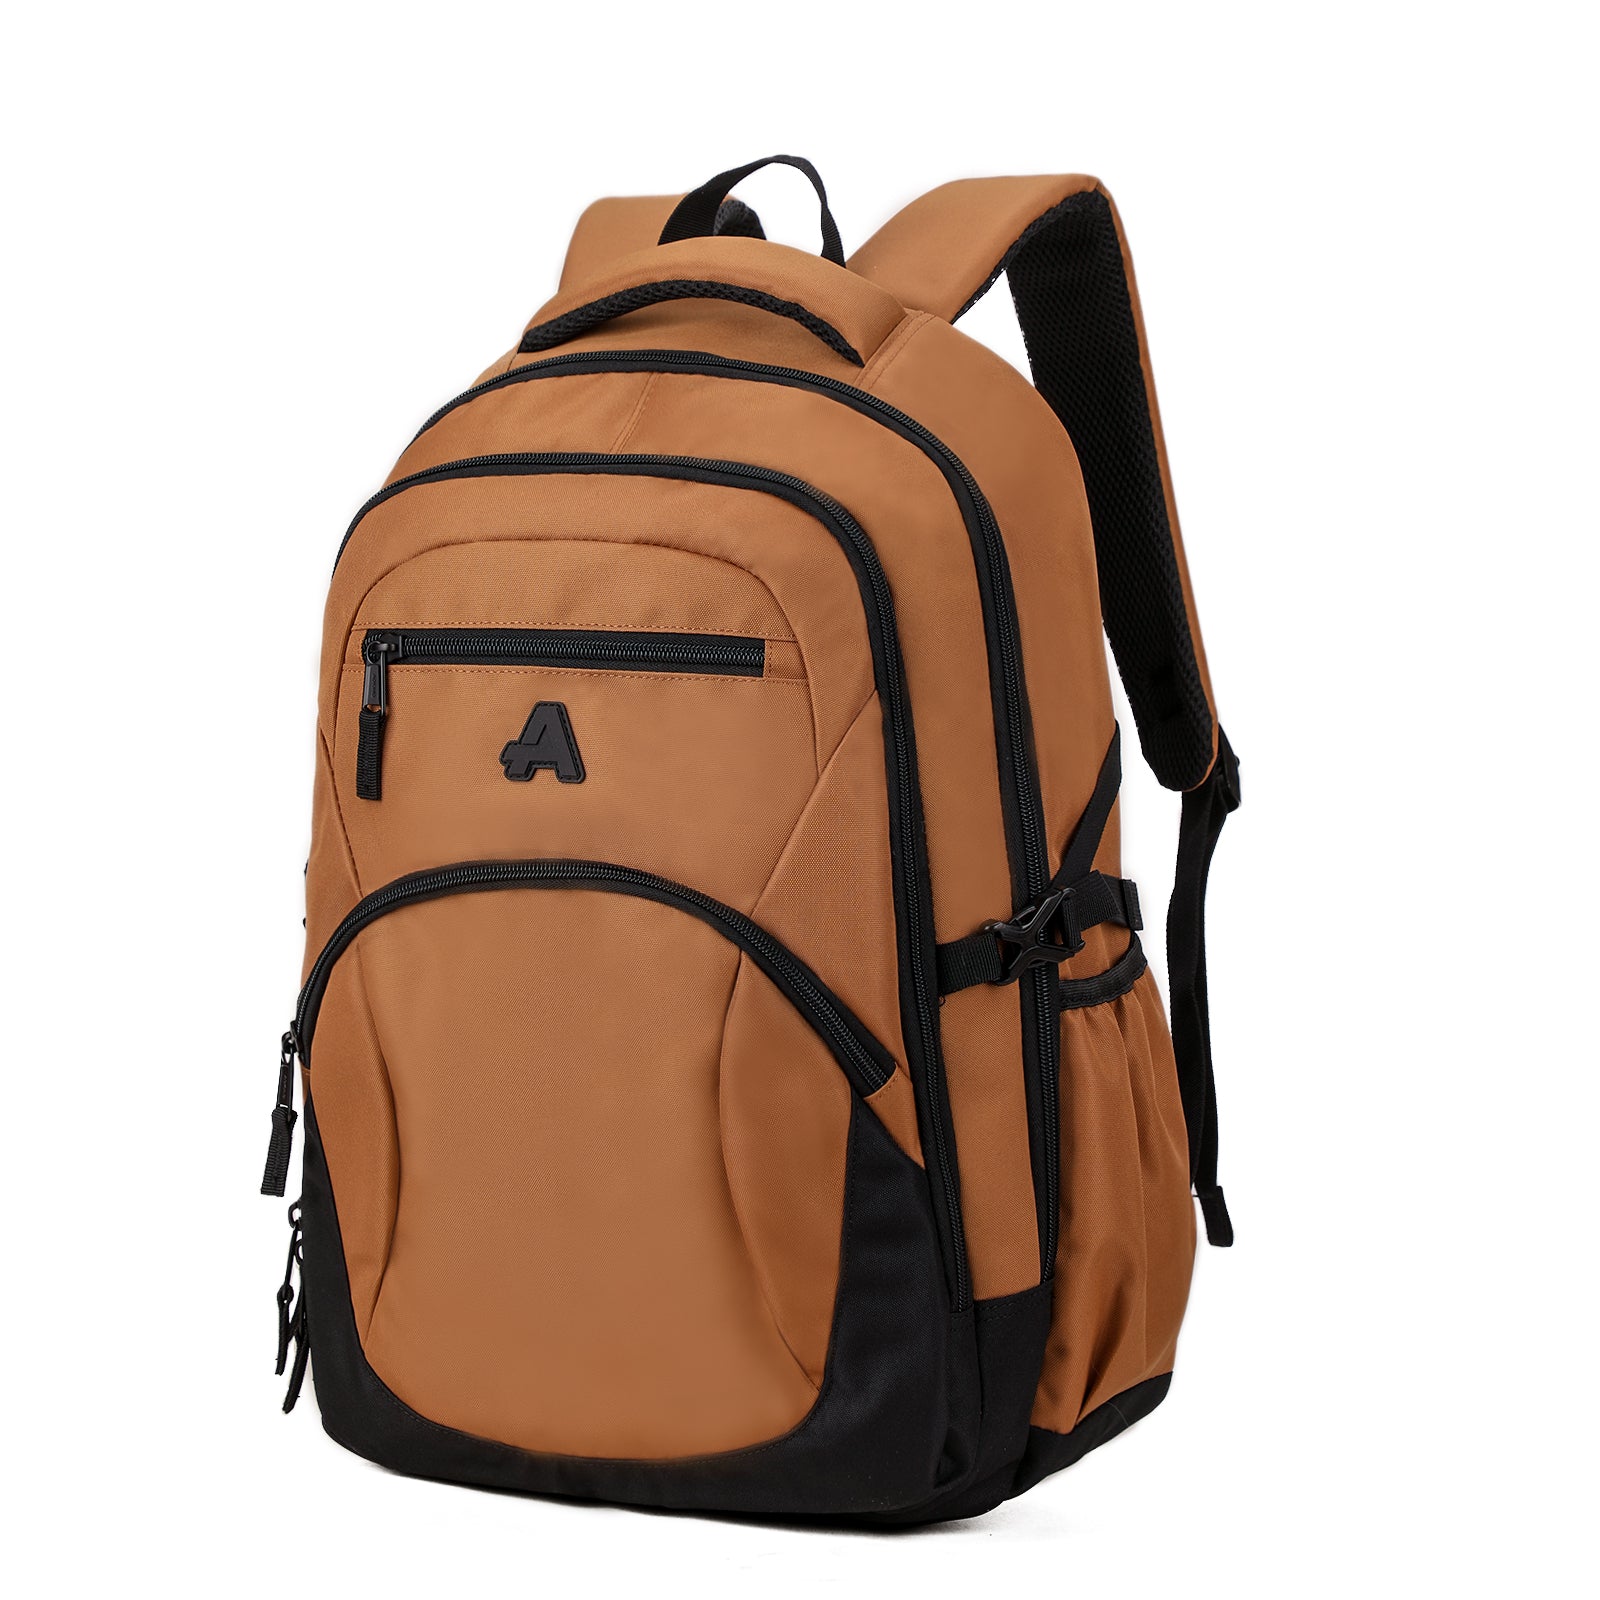 Aoking Travel Backpack SN2678 Brown